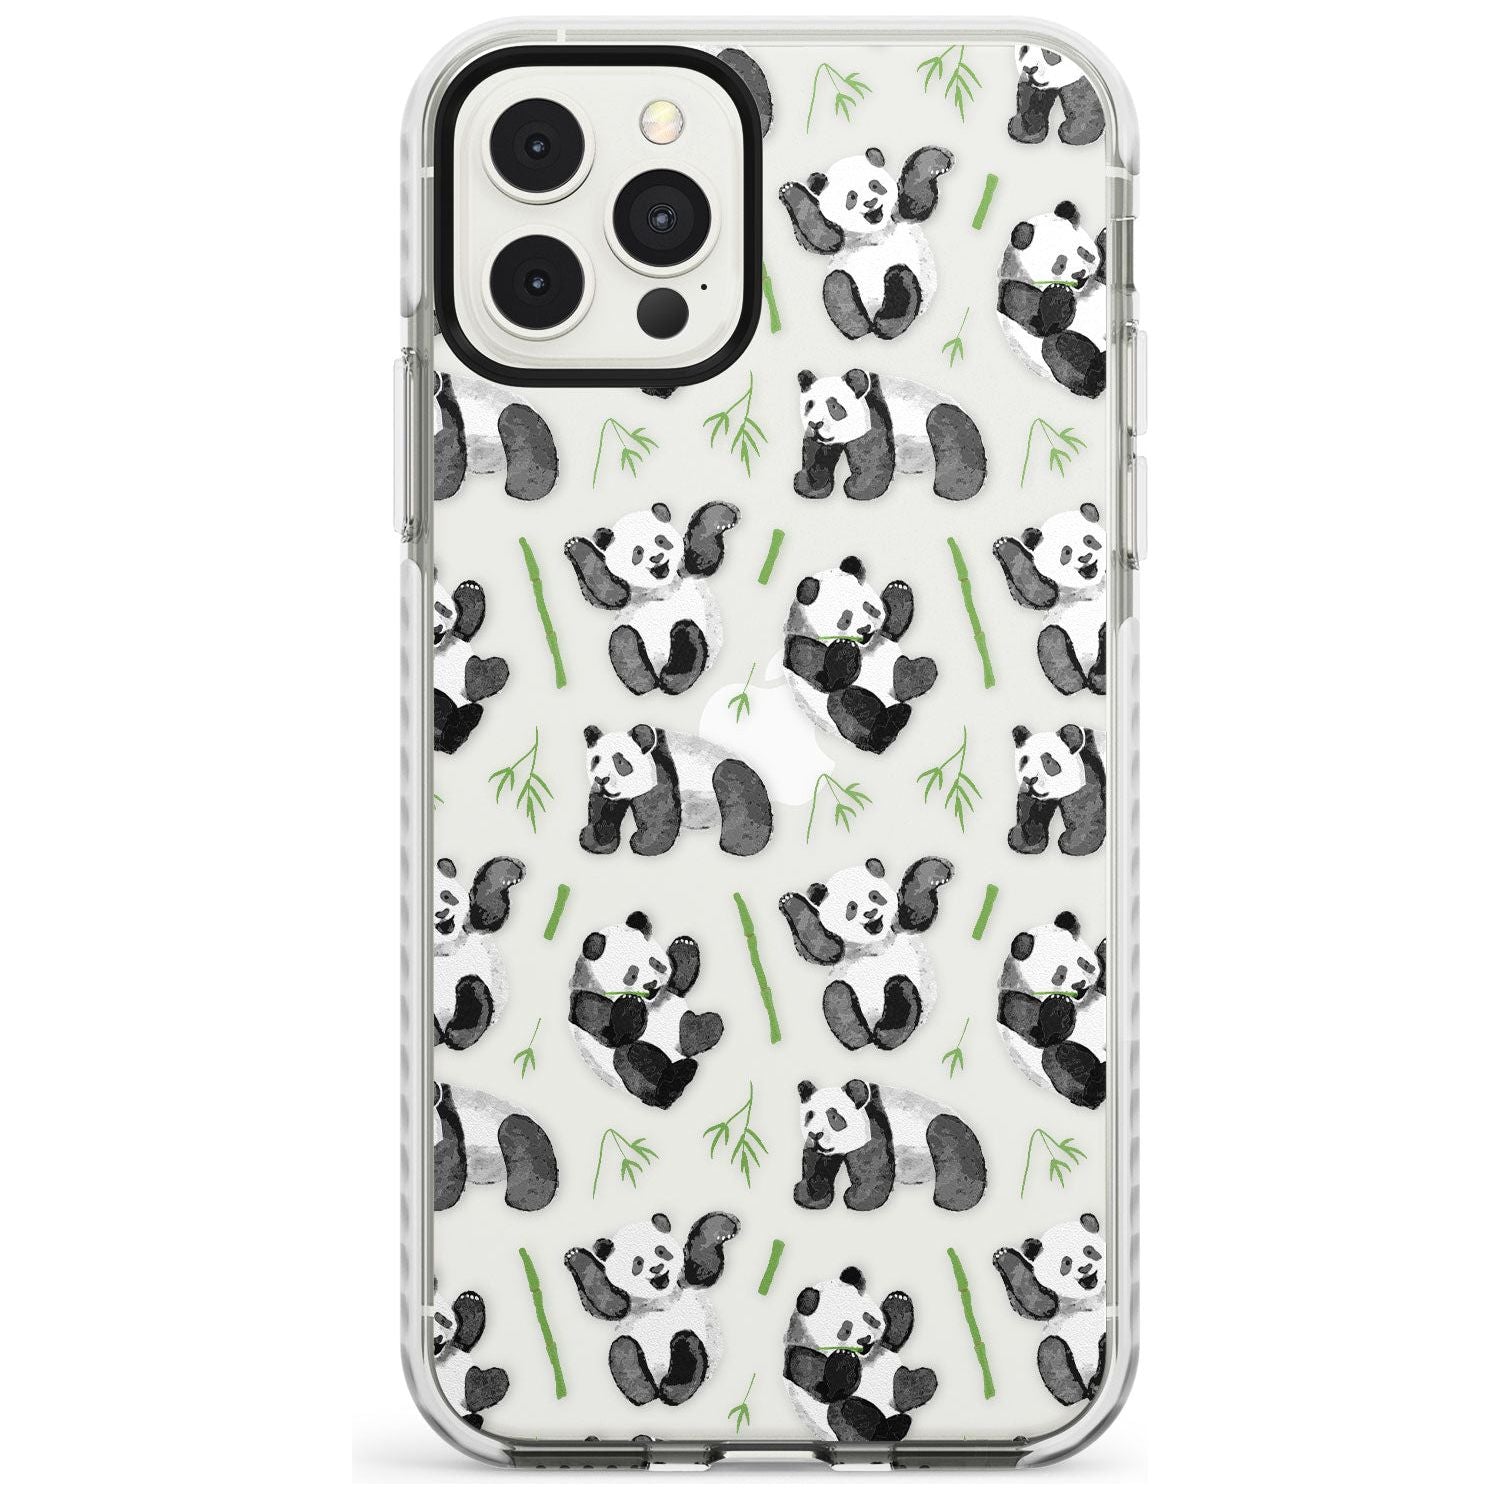 Watercolour Panda Pattern Slim TPU Phone Case for iPhone 11 Pro Max